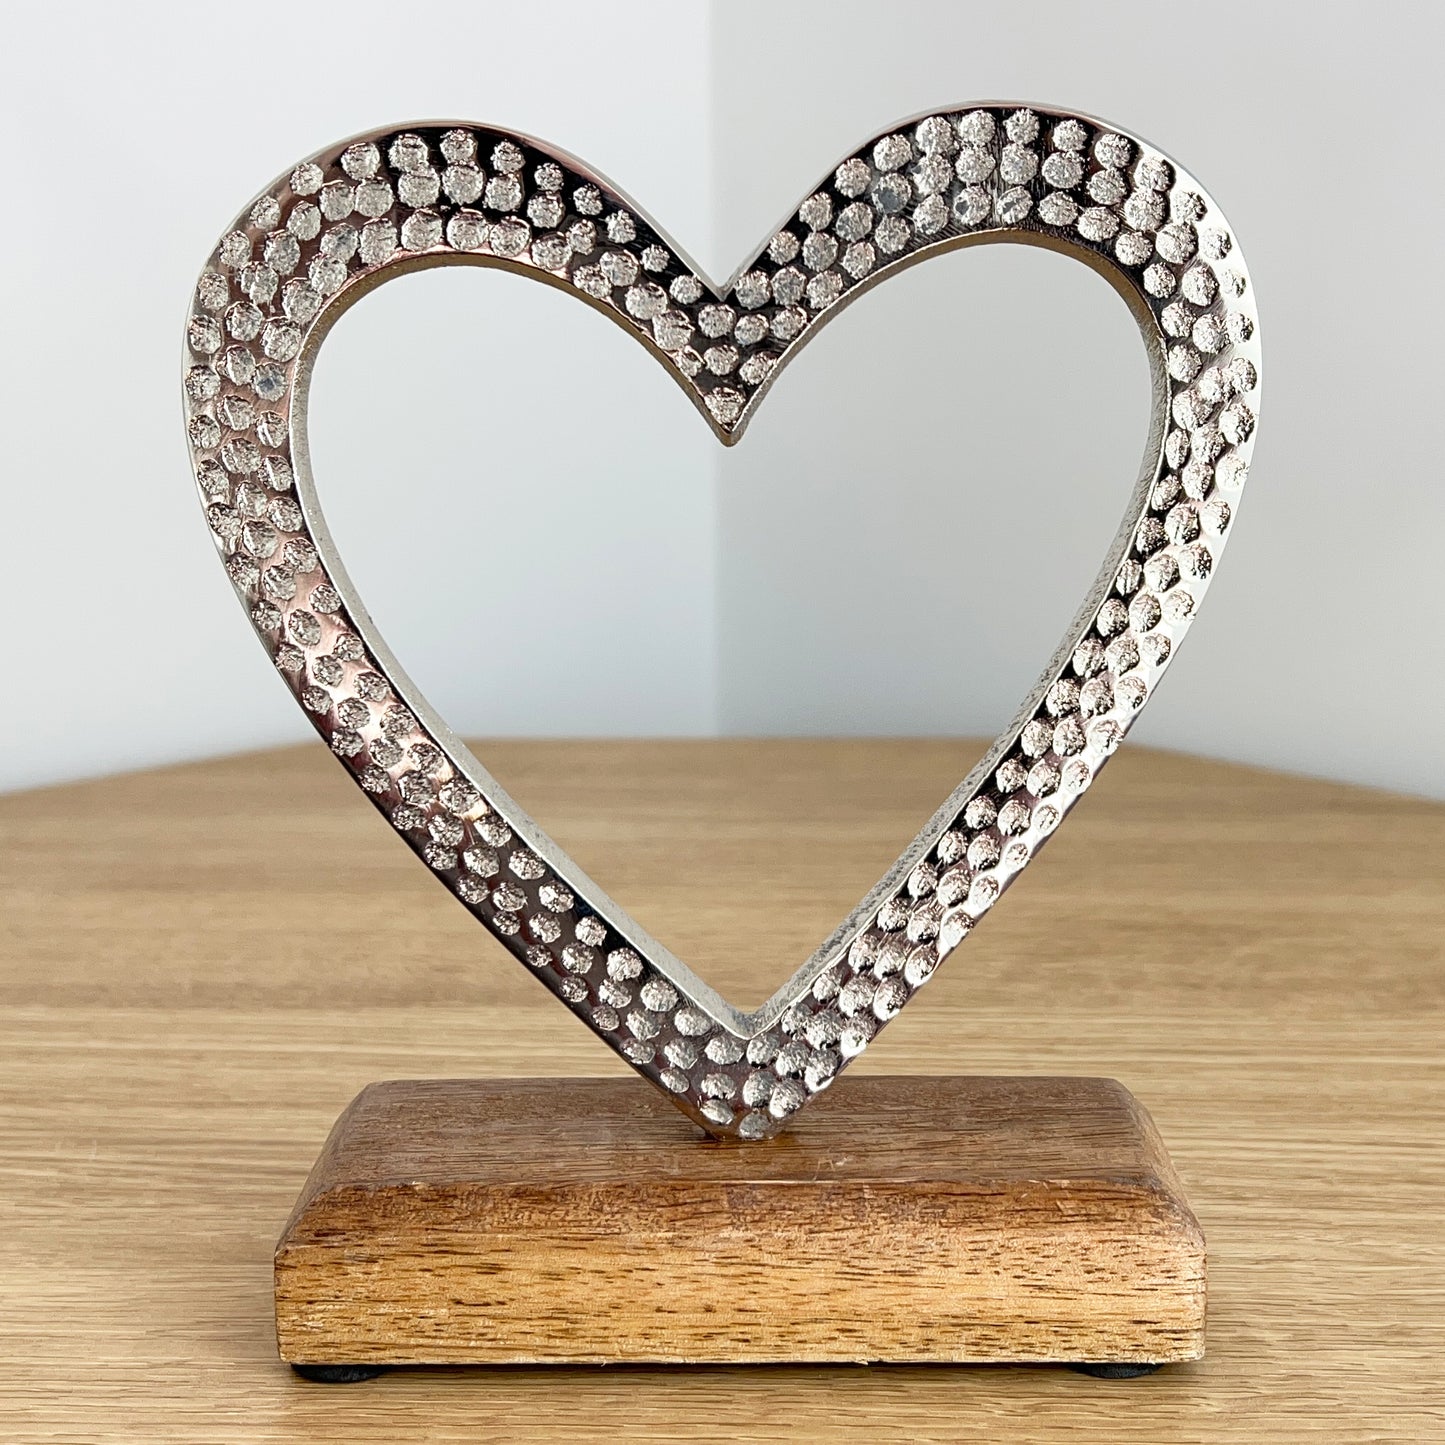 17cm Rustic Heart Sculpture